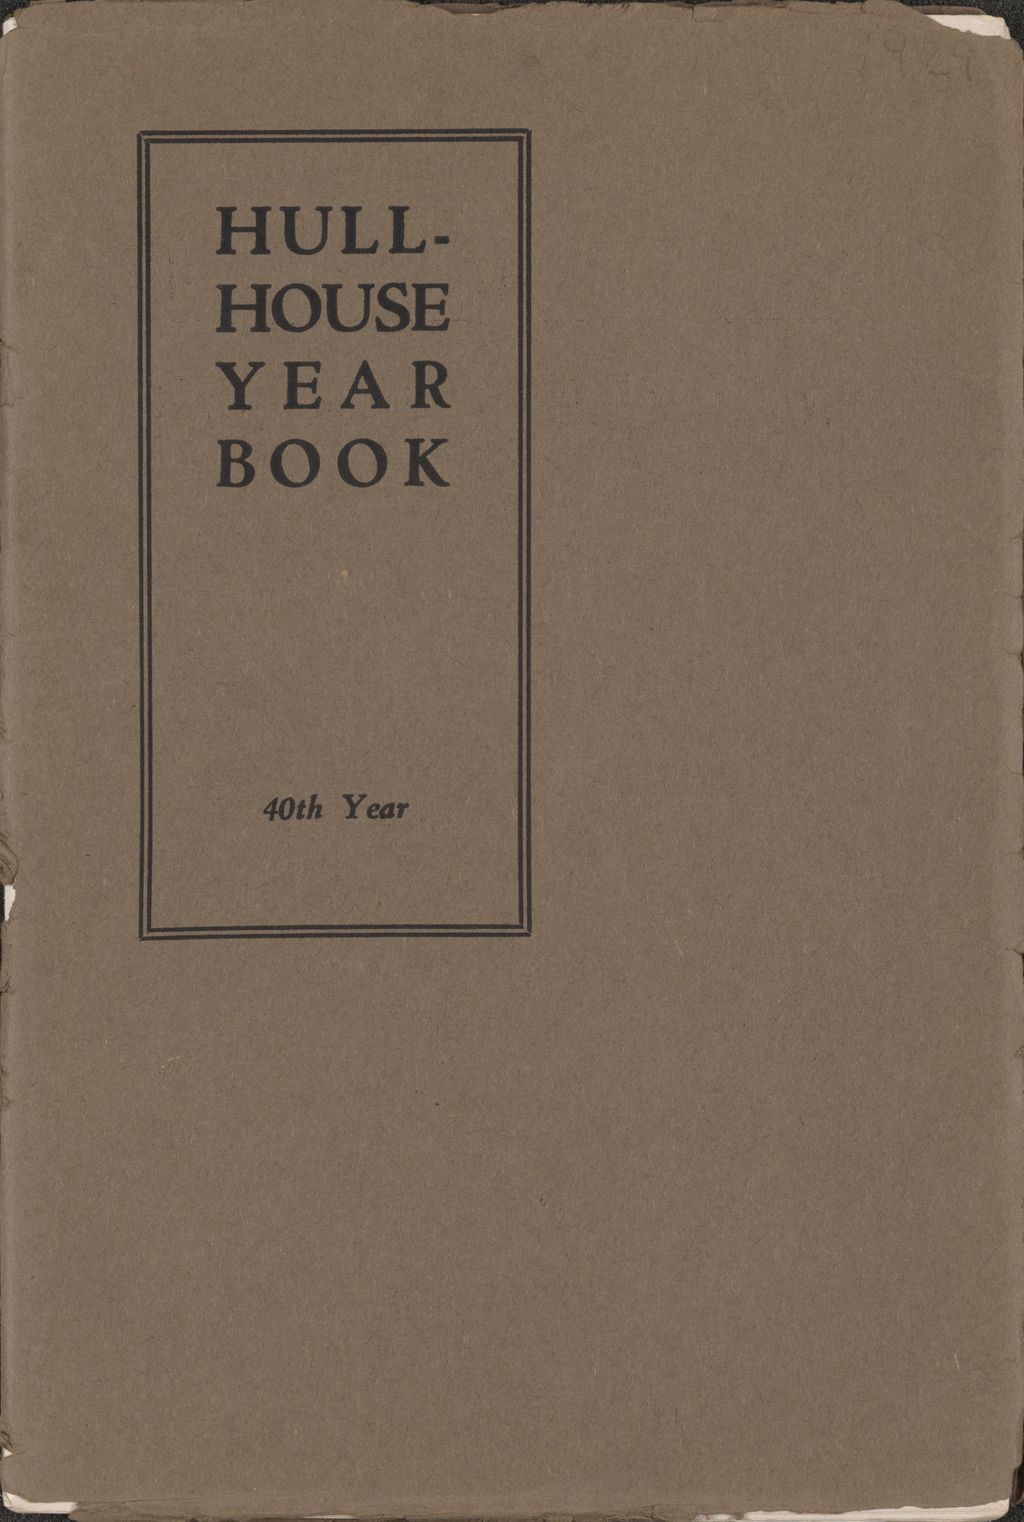 Hull-House Year Book, 1927-1928